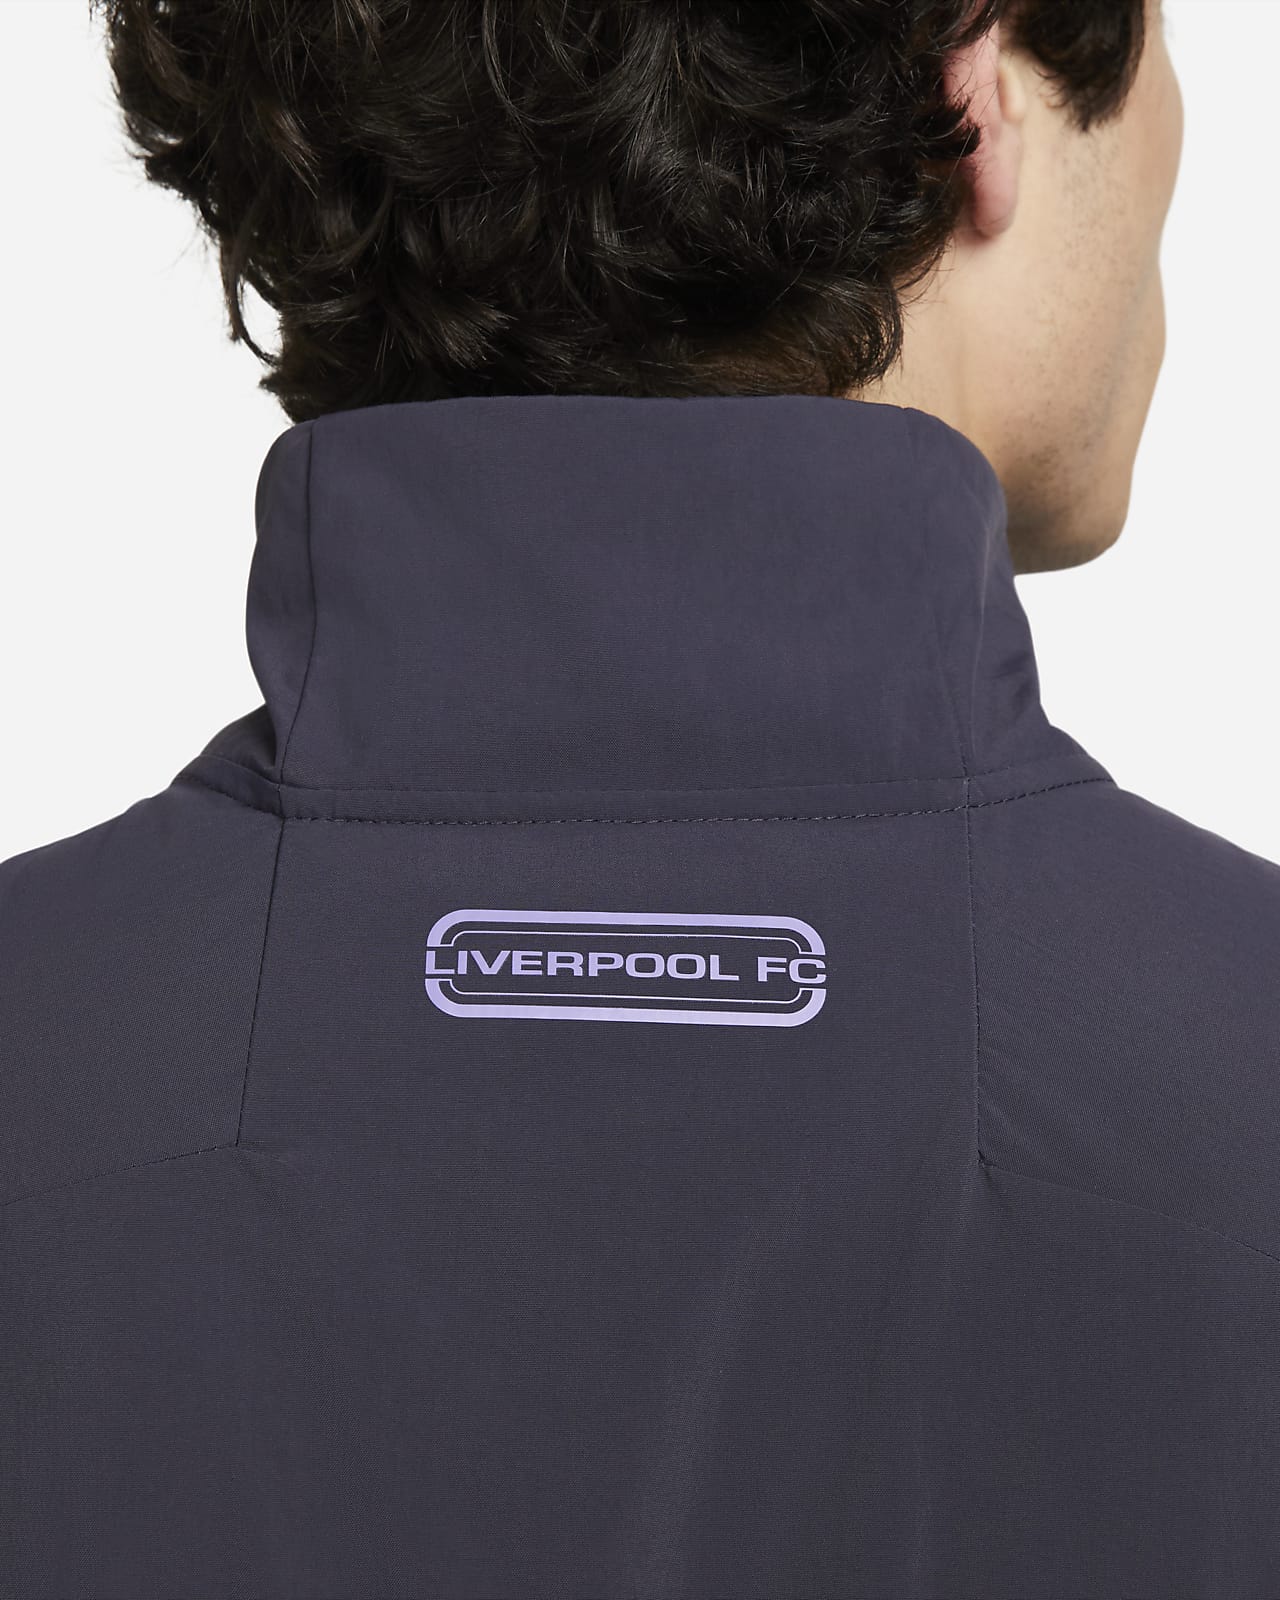 Liverpool FC Revival Third Men's Nike Soccer Woven Jacket